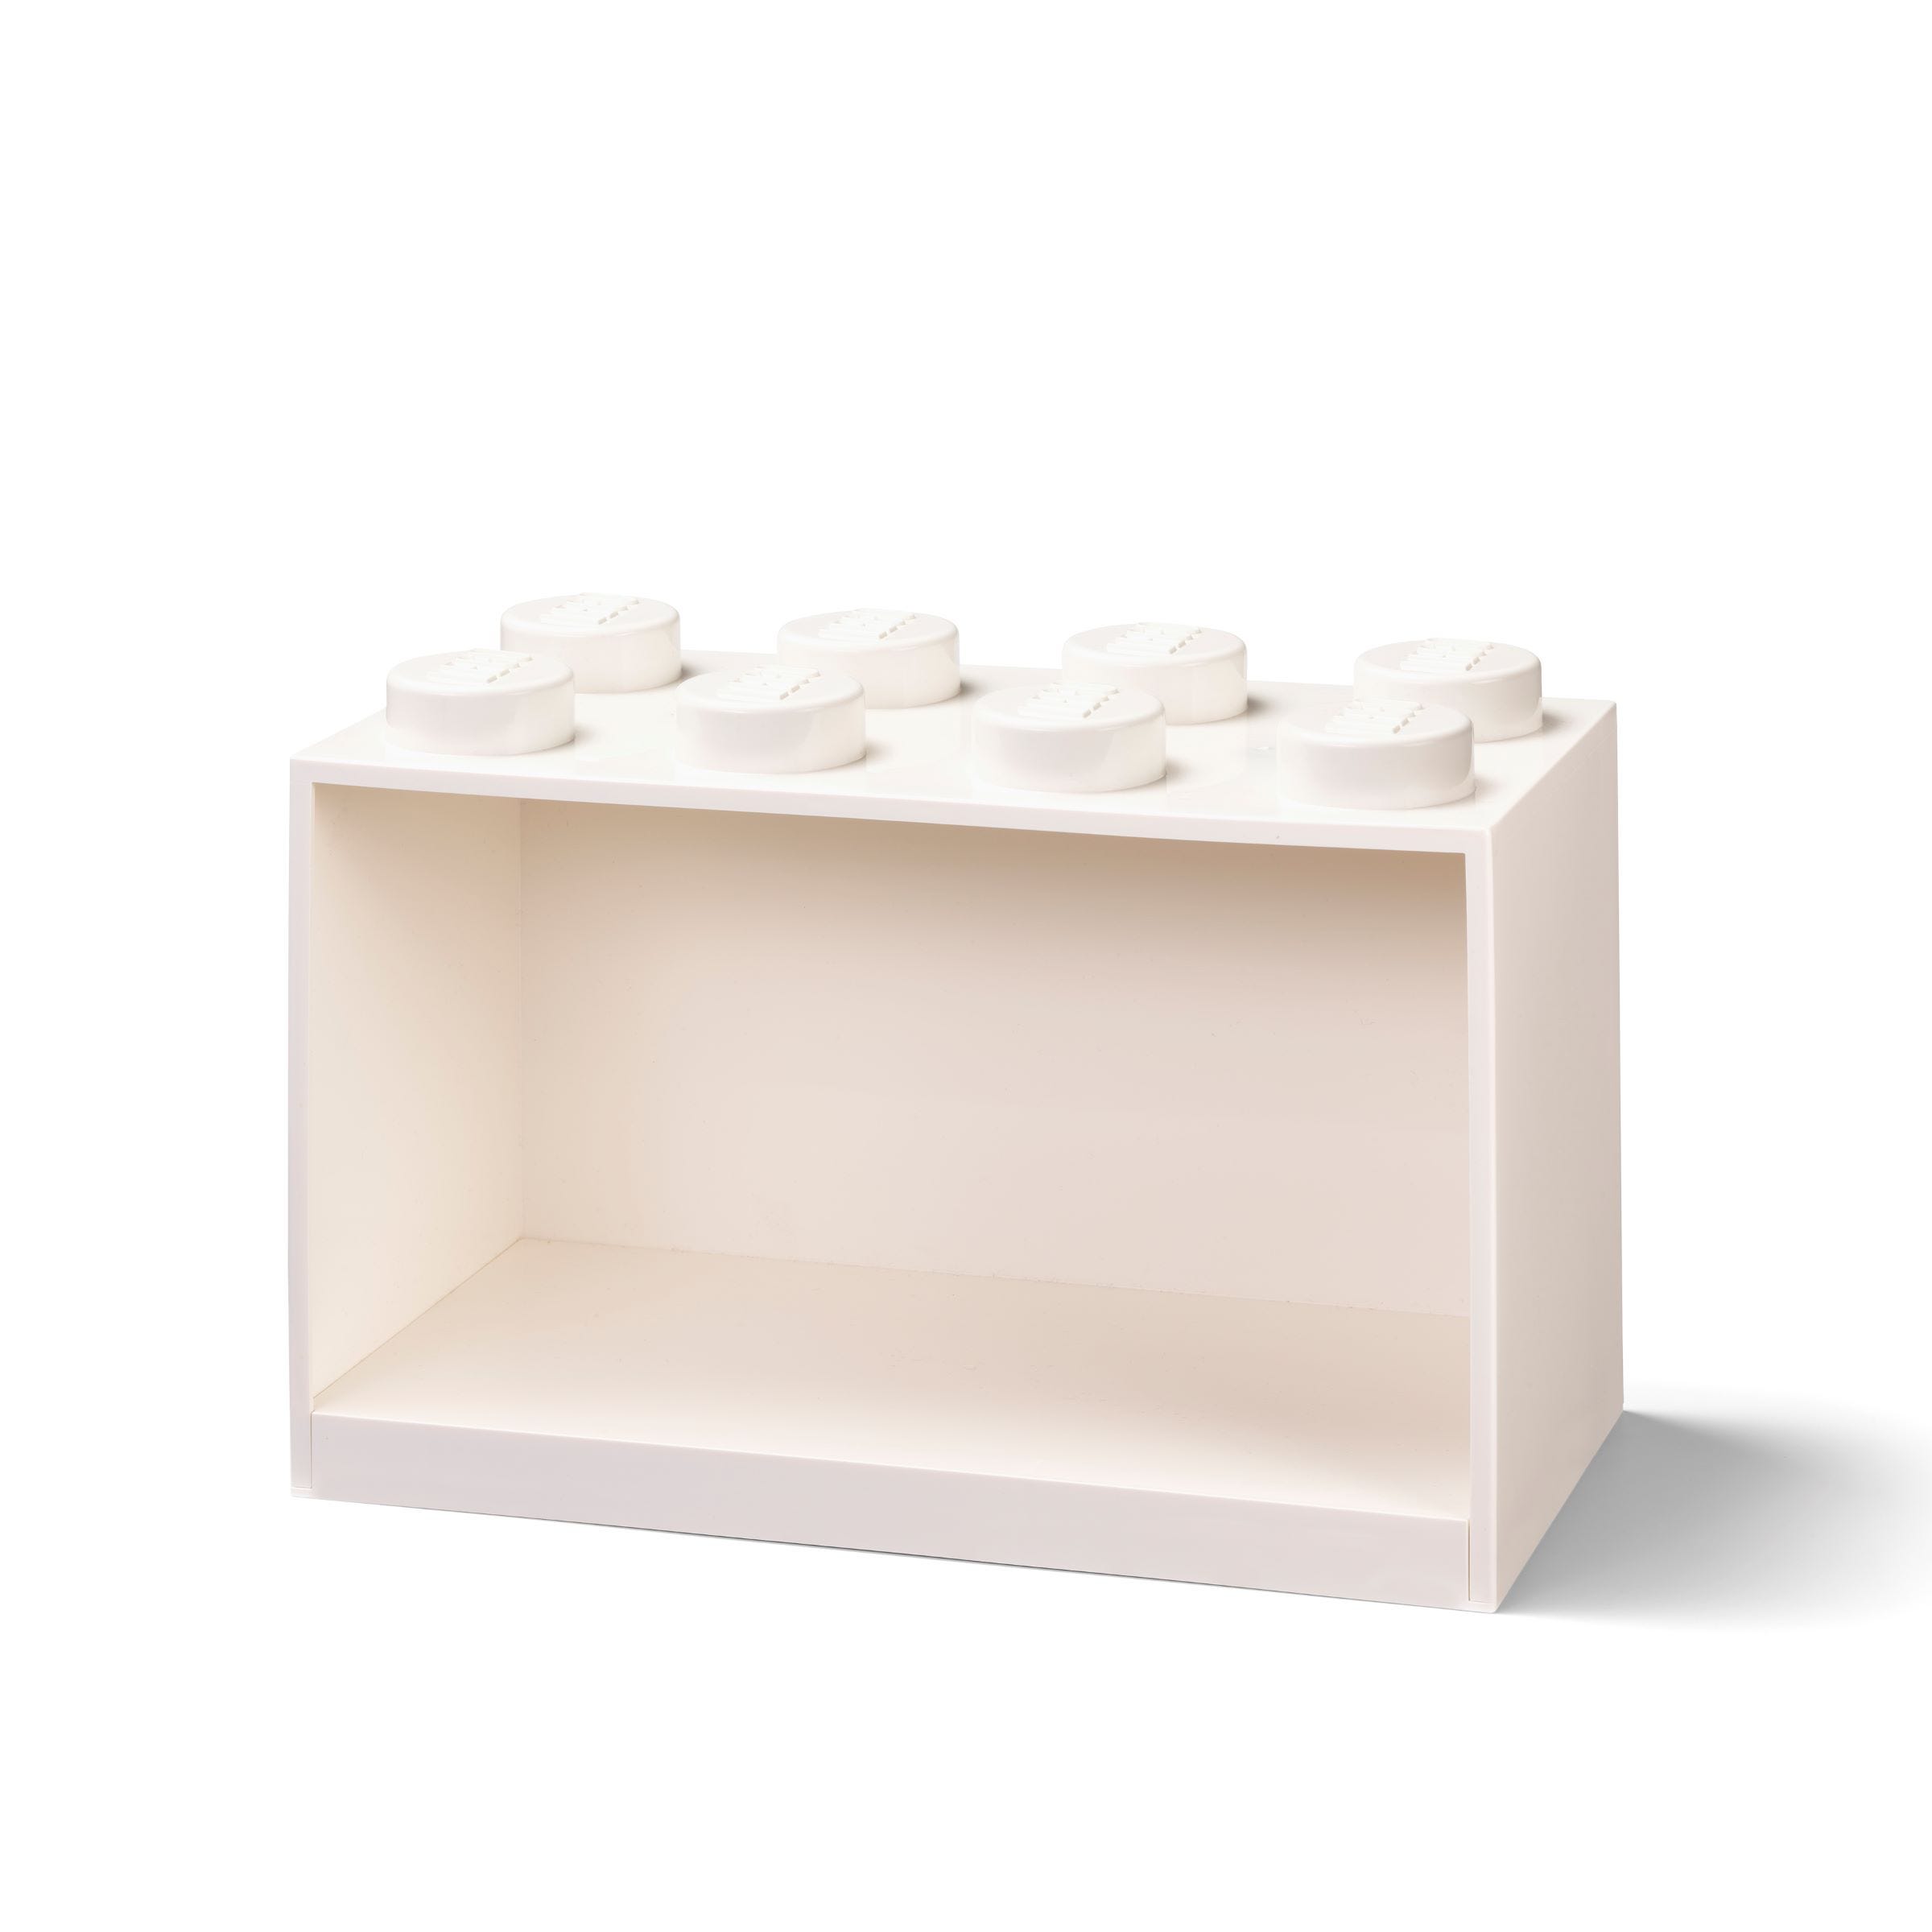 8-Stud Brick Shelf White